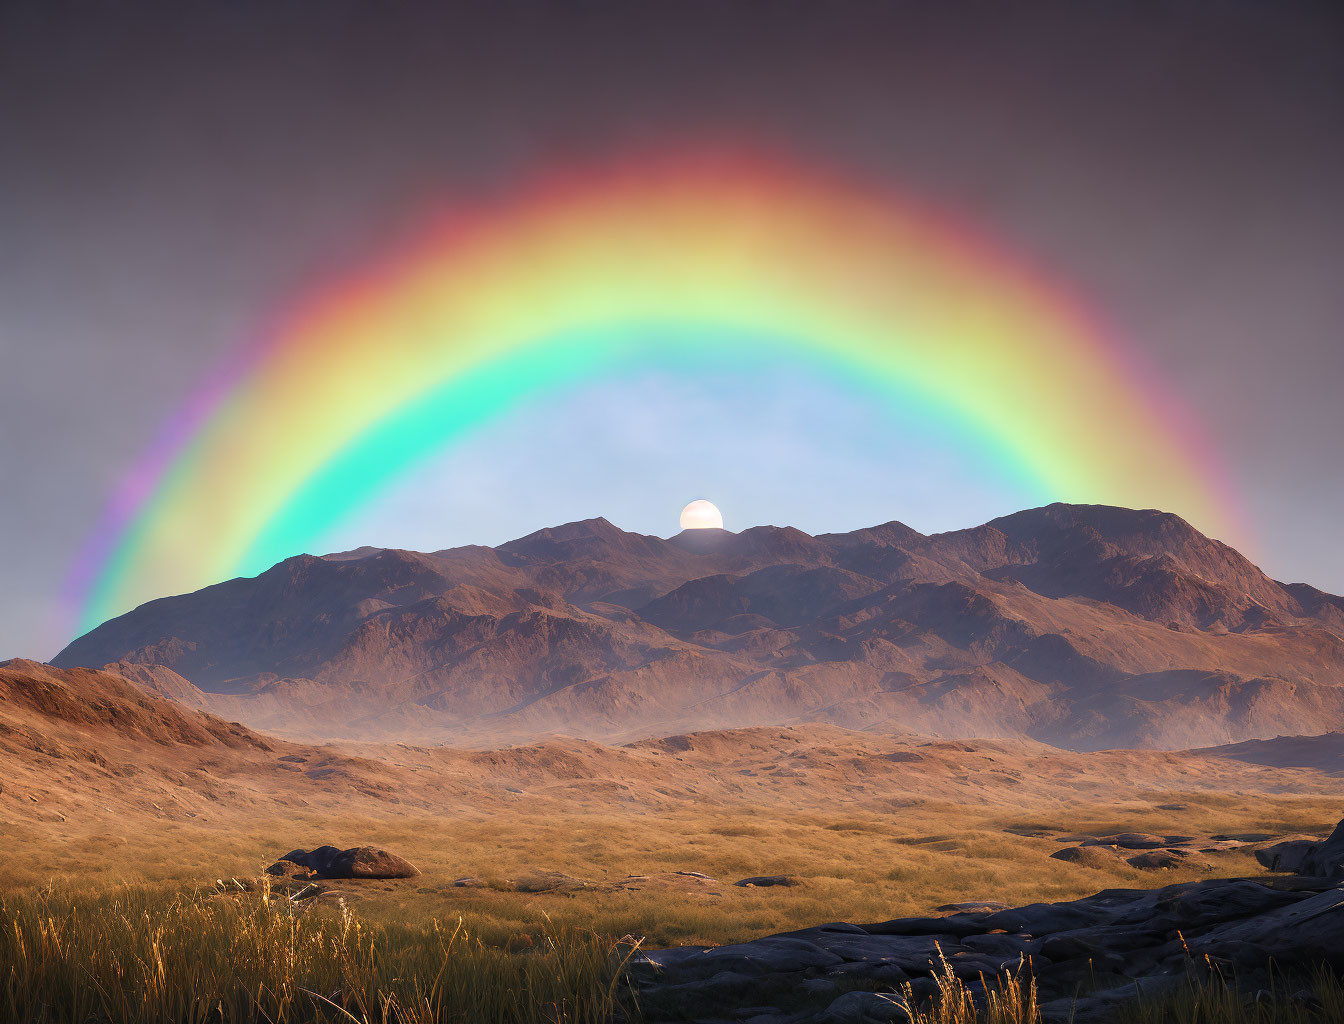 Colorful rainbow over rugged mountain range under hazy sky